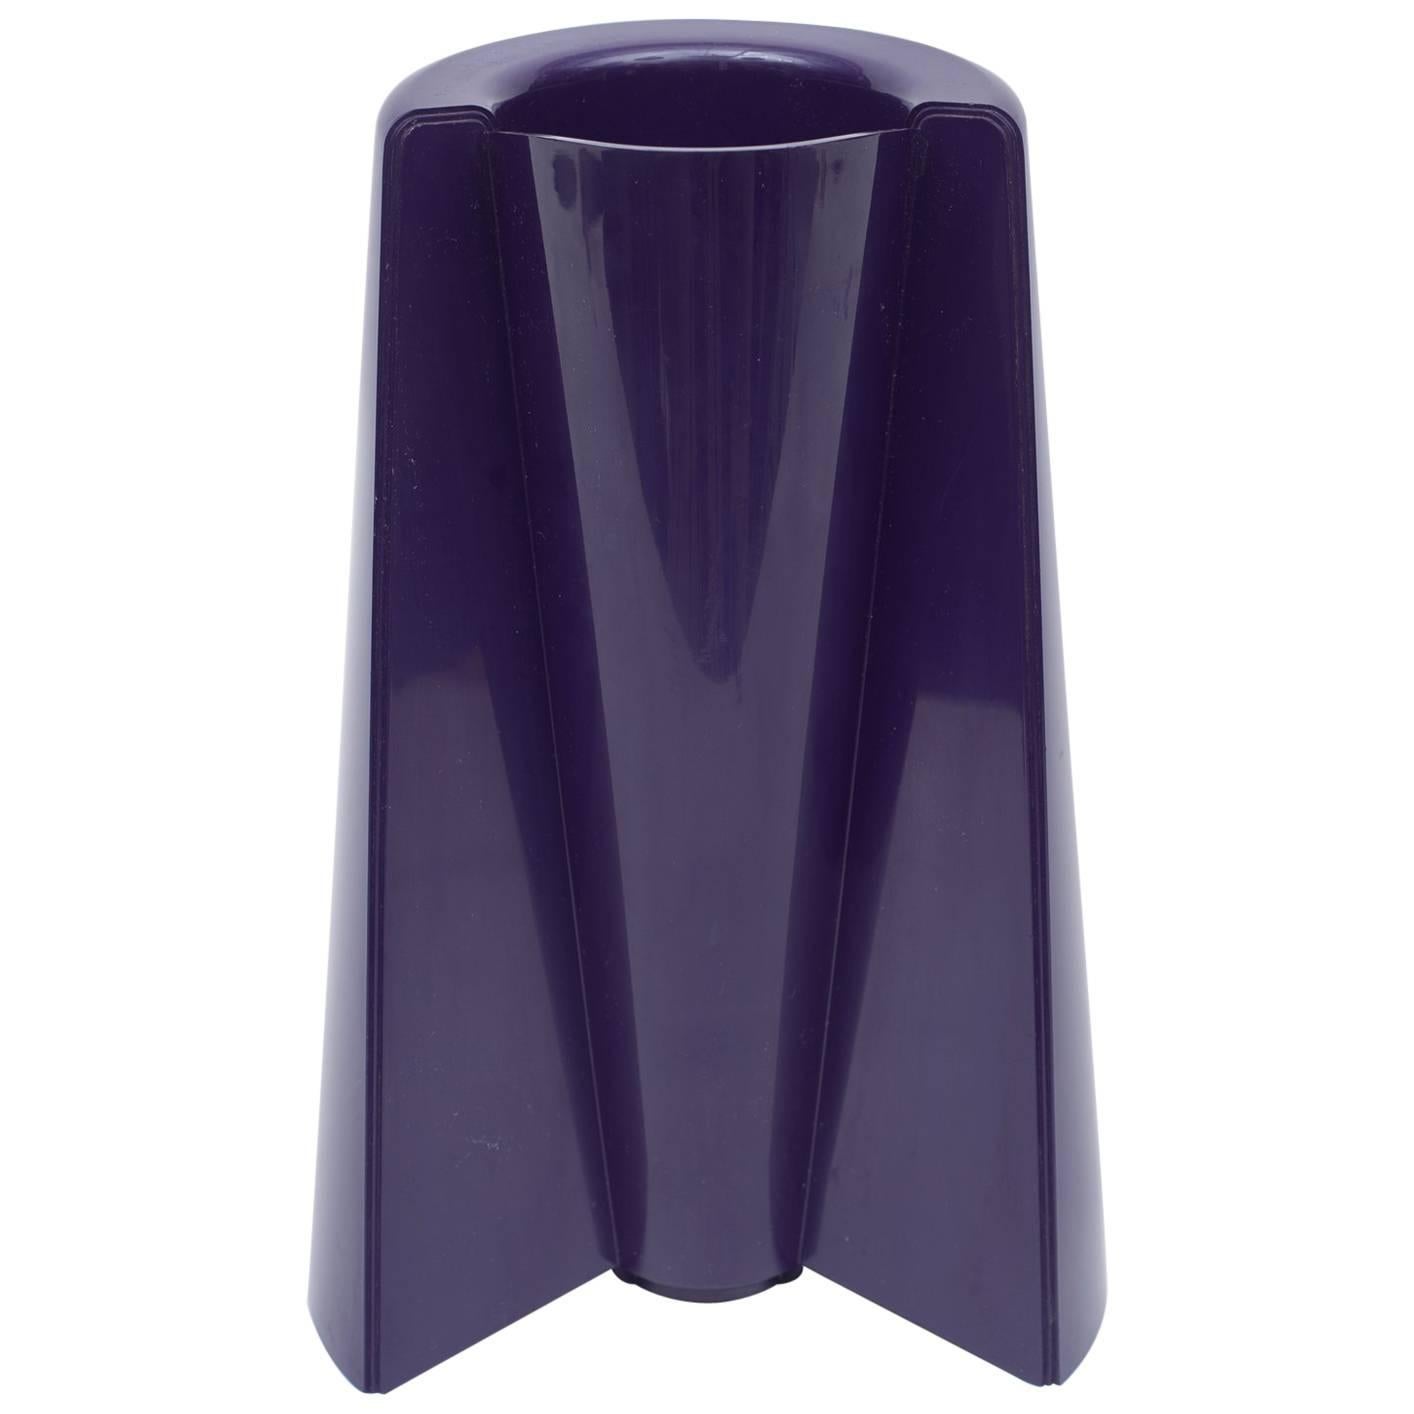 Enzo Mari "Pago - Pago" Dark Purple Plastic Vase for Danese, Italy, 1969